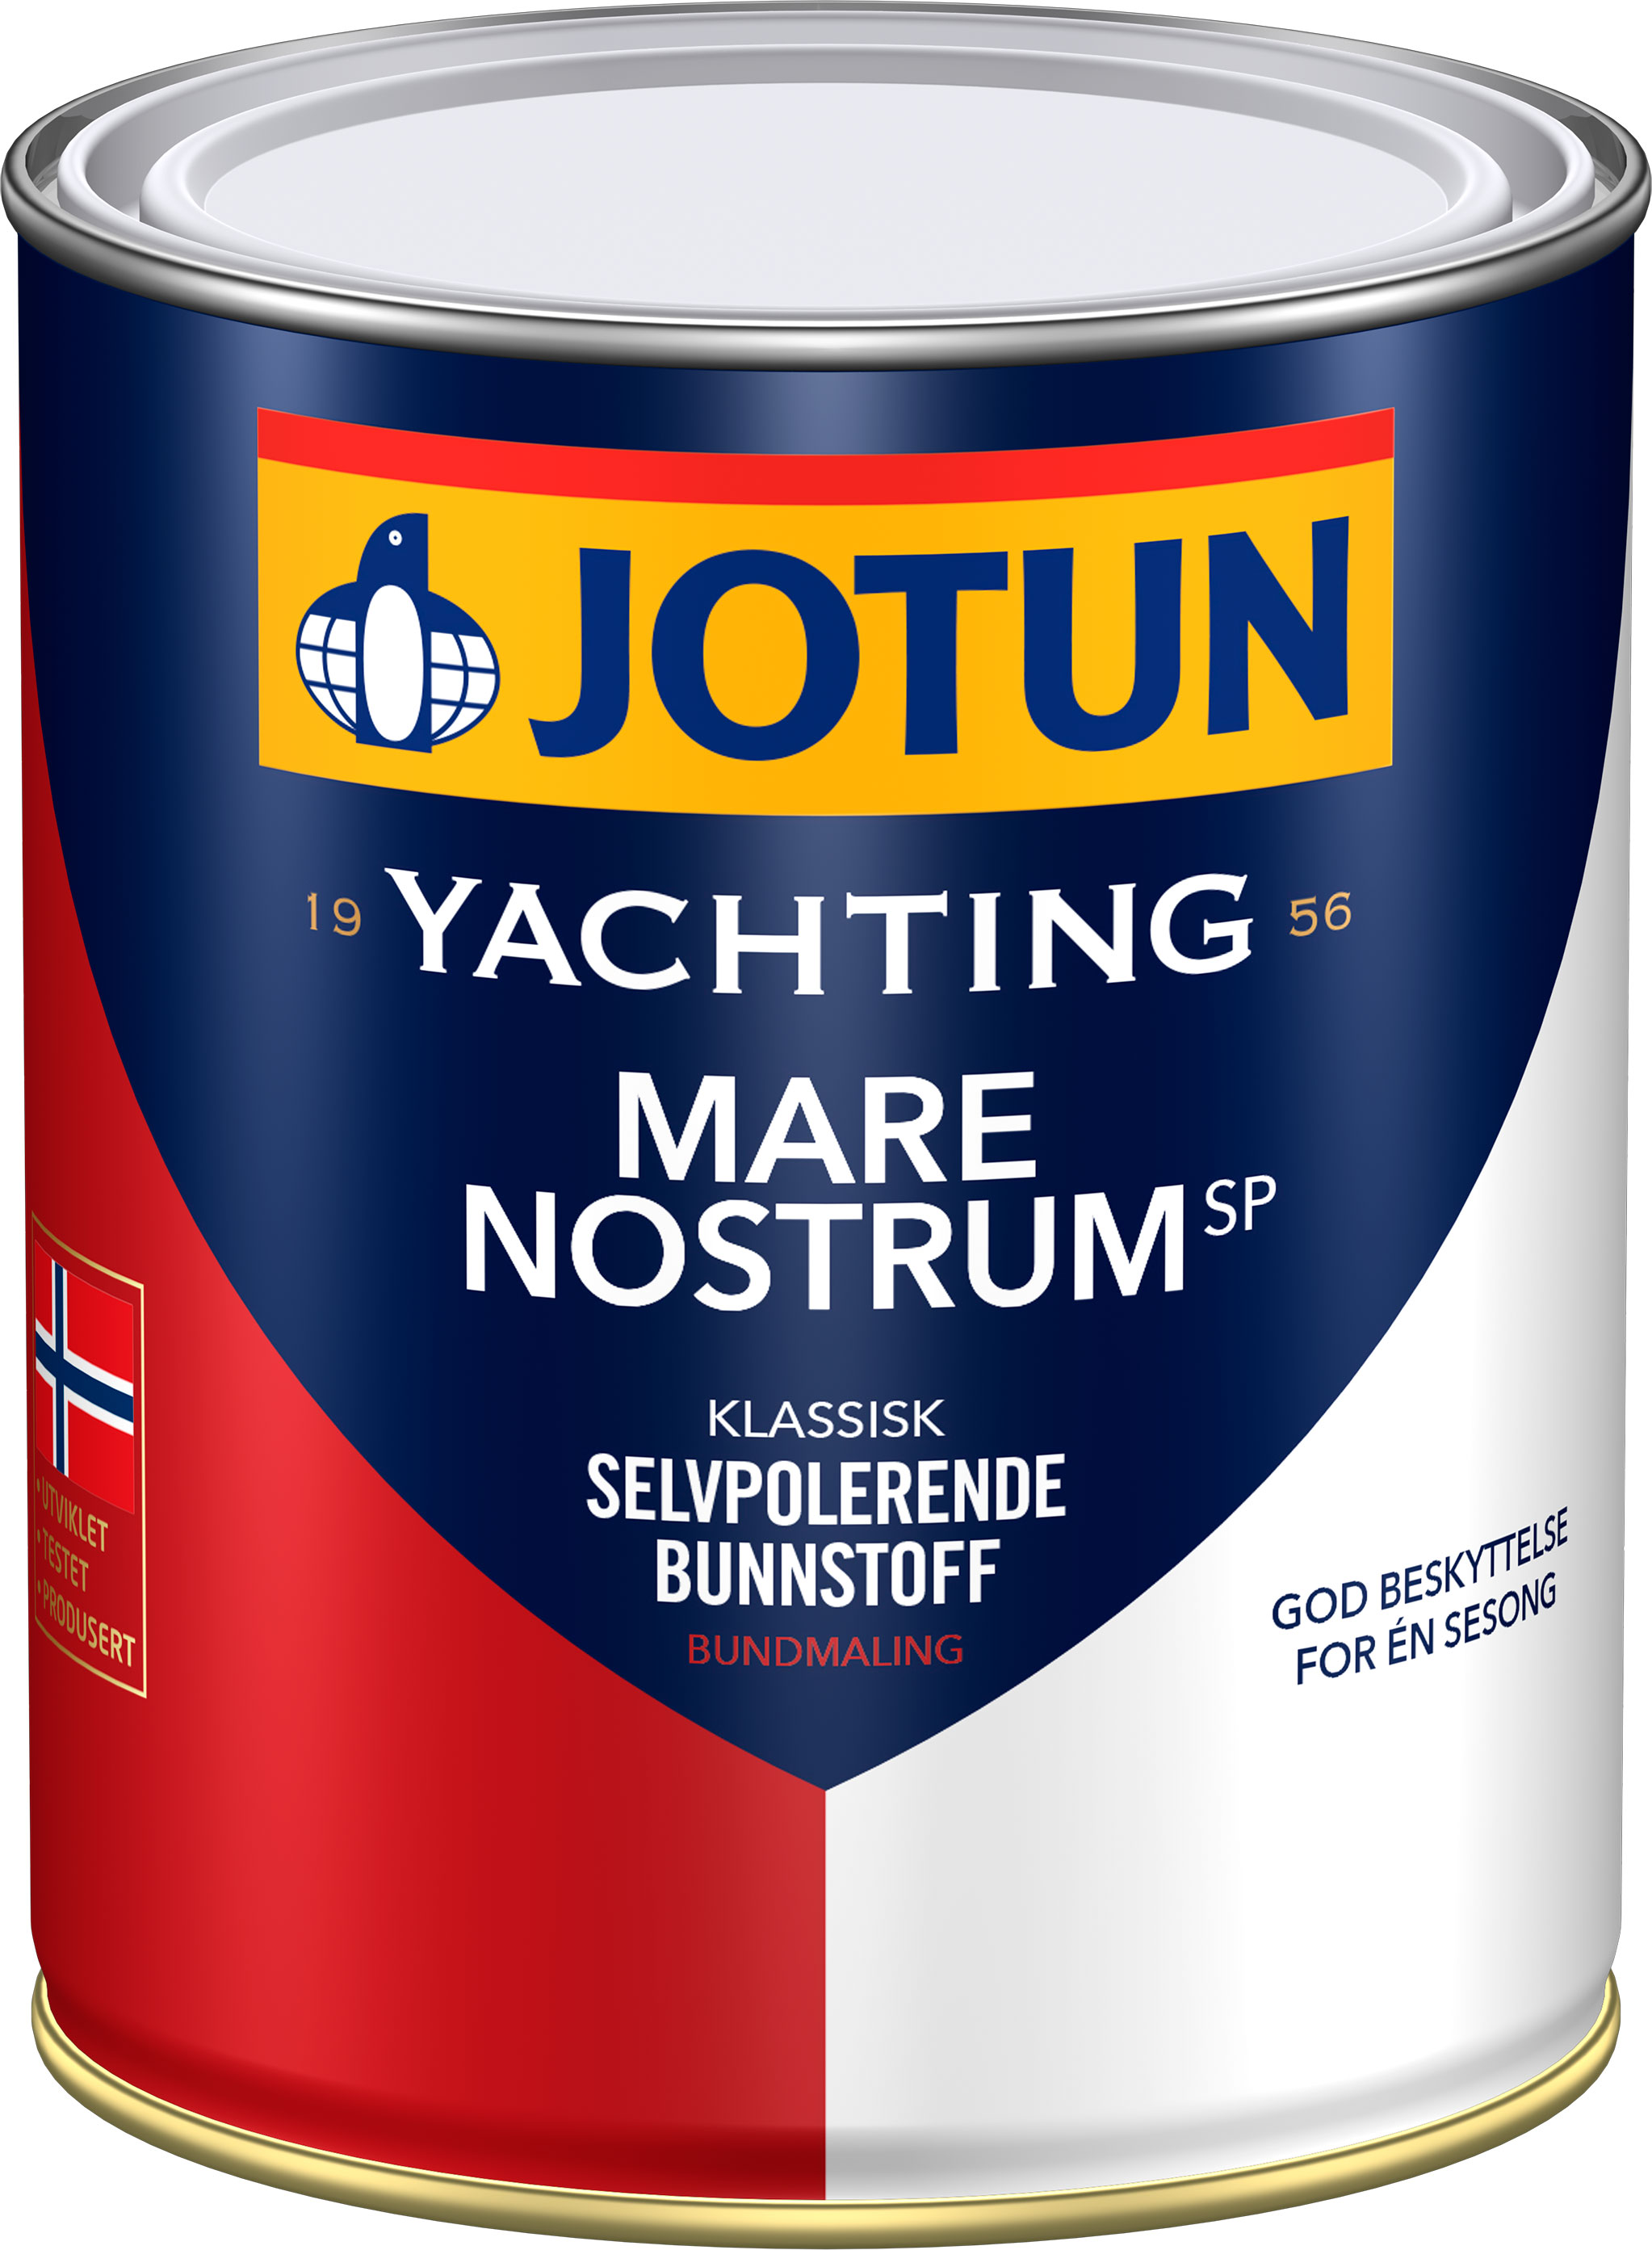 Mare Nostrum SP - Jotun